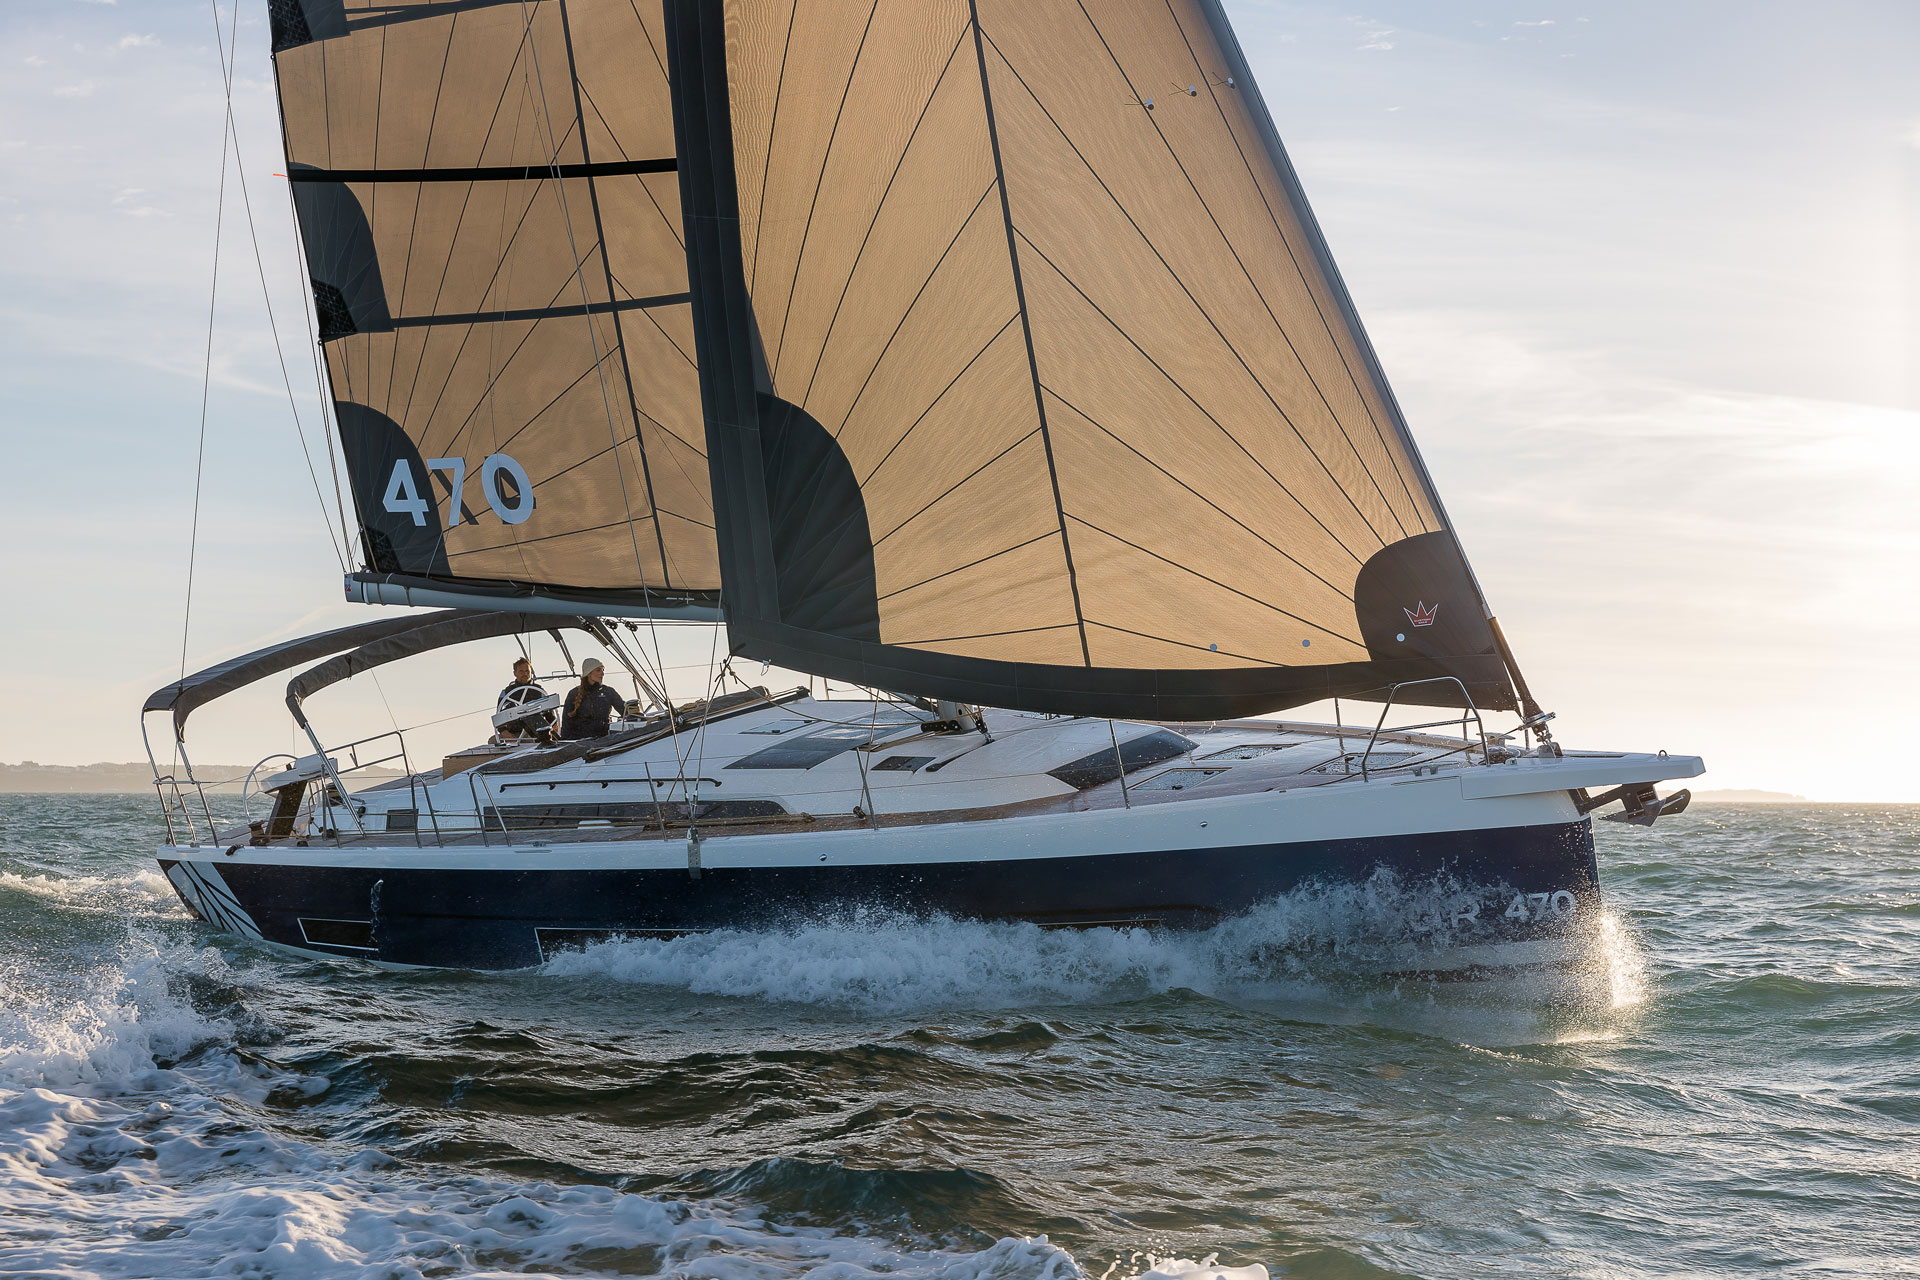 luxury-sailing-yachts-dufour-470-boat-photo-sail-5